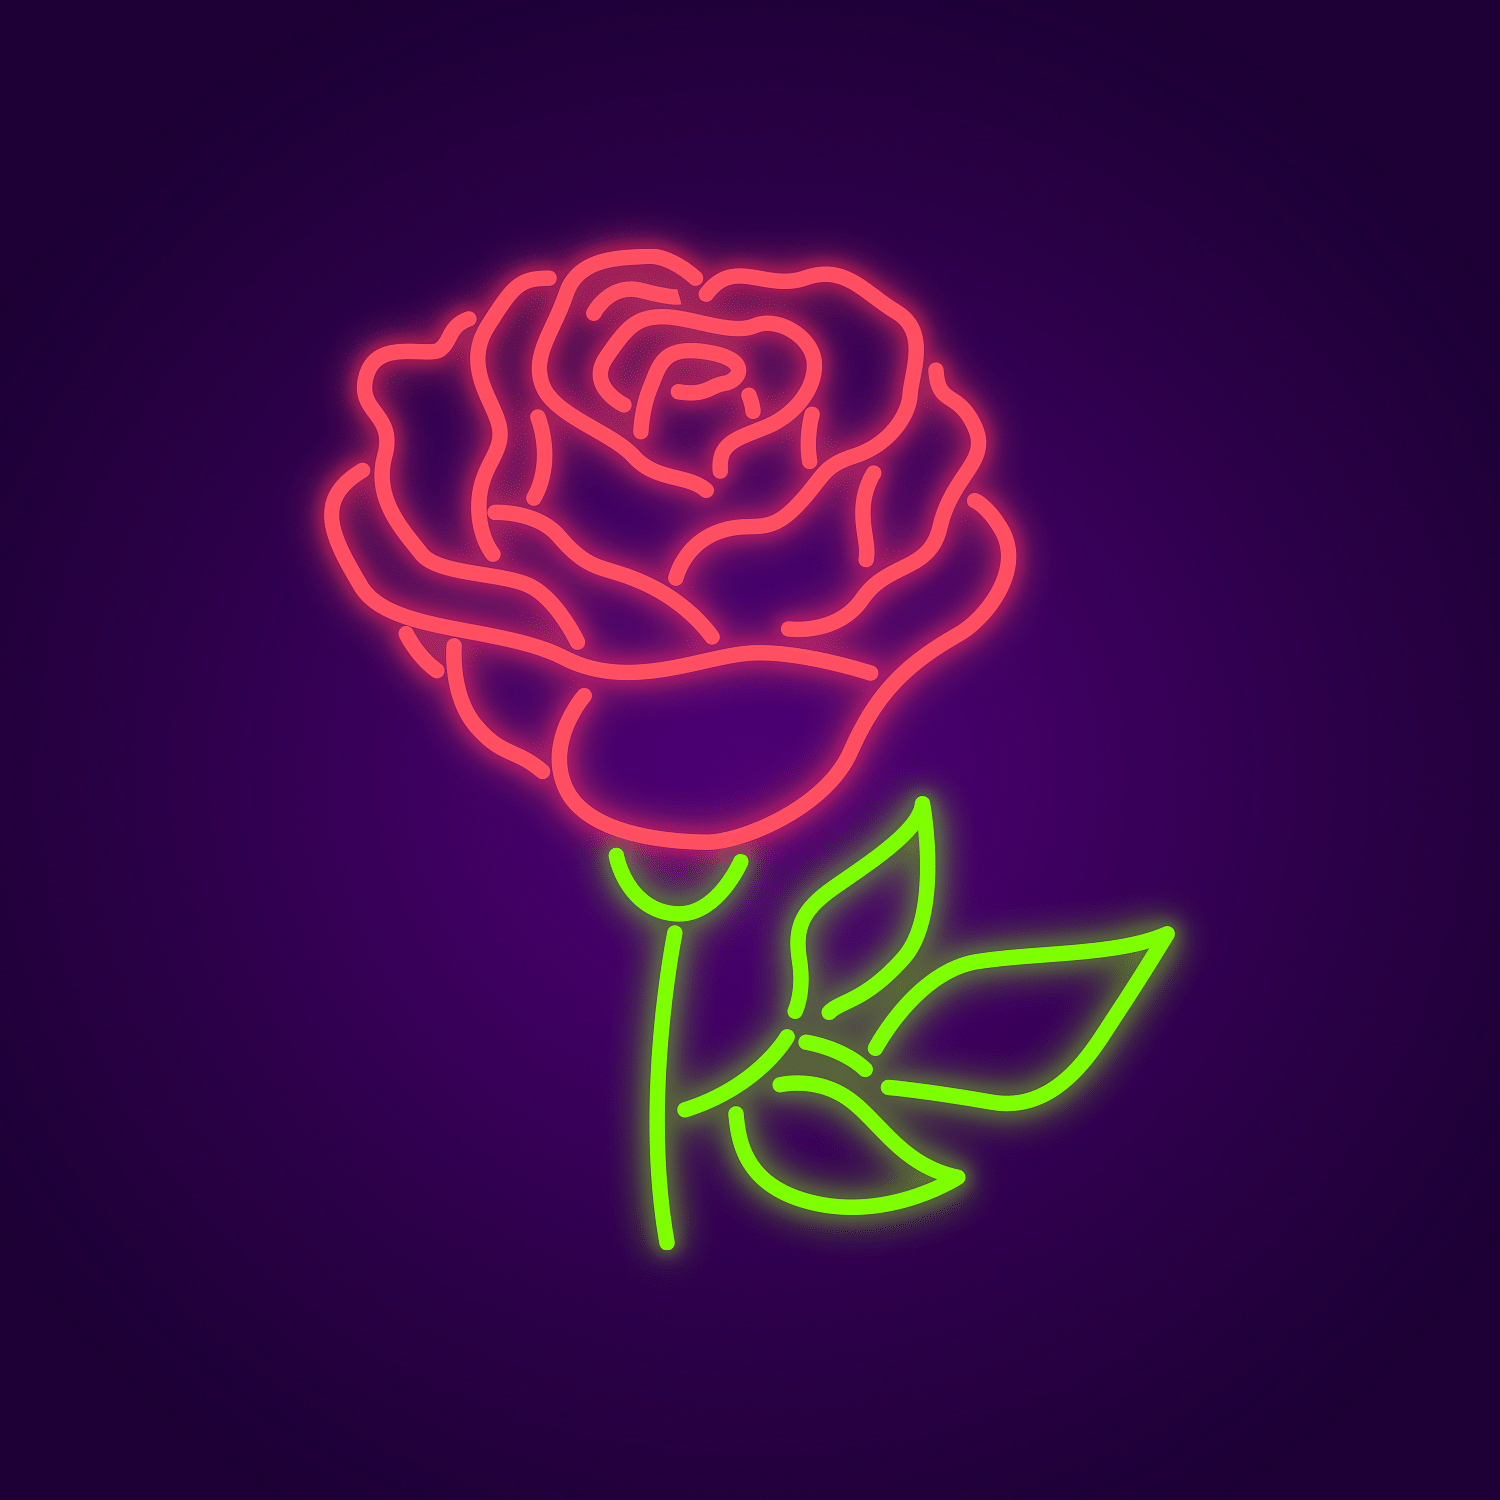 Rose Neon Light | Neon LED Sign | Neon Light | By Neonize